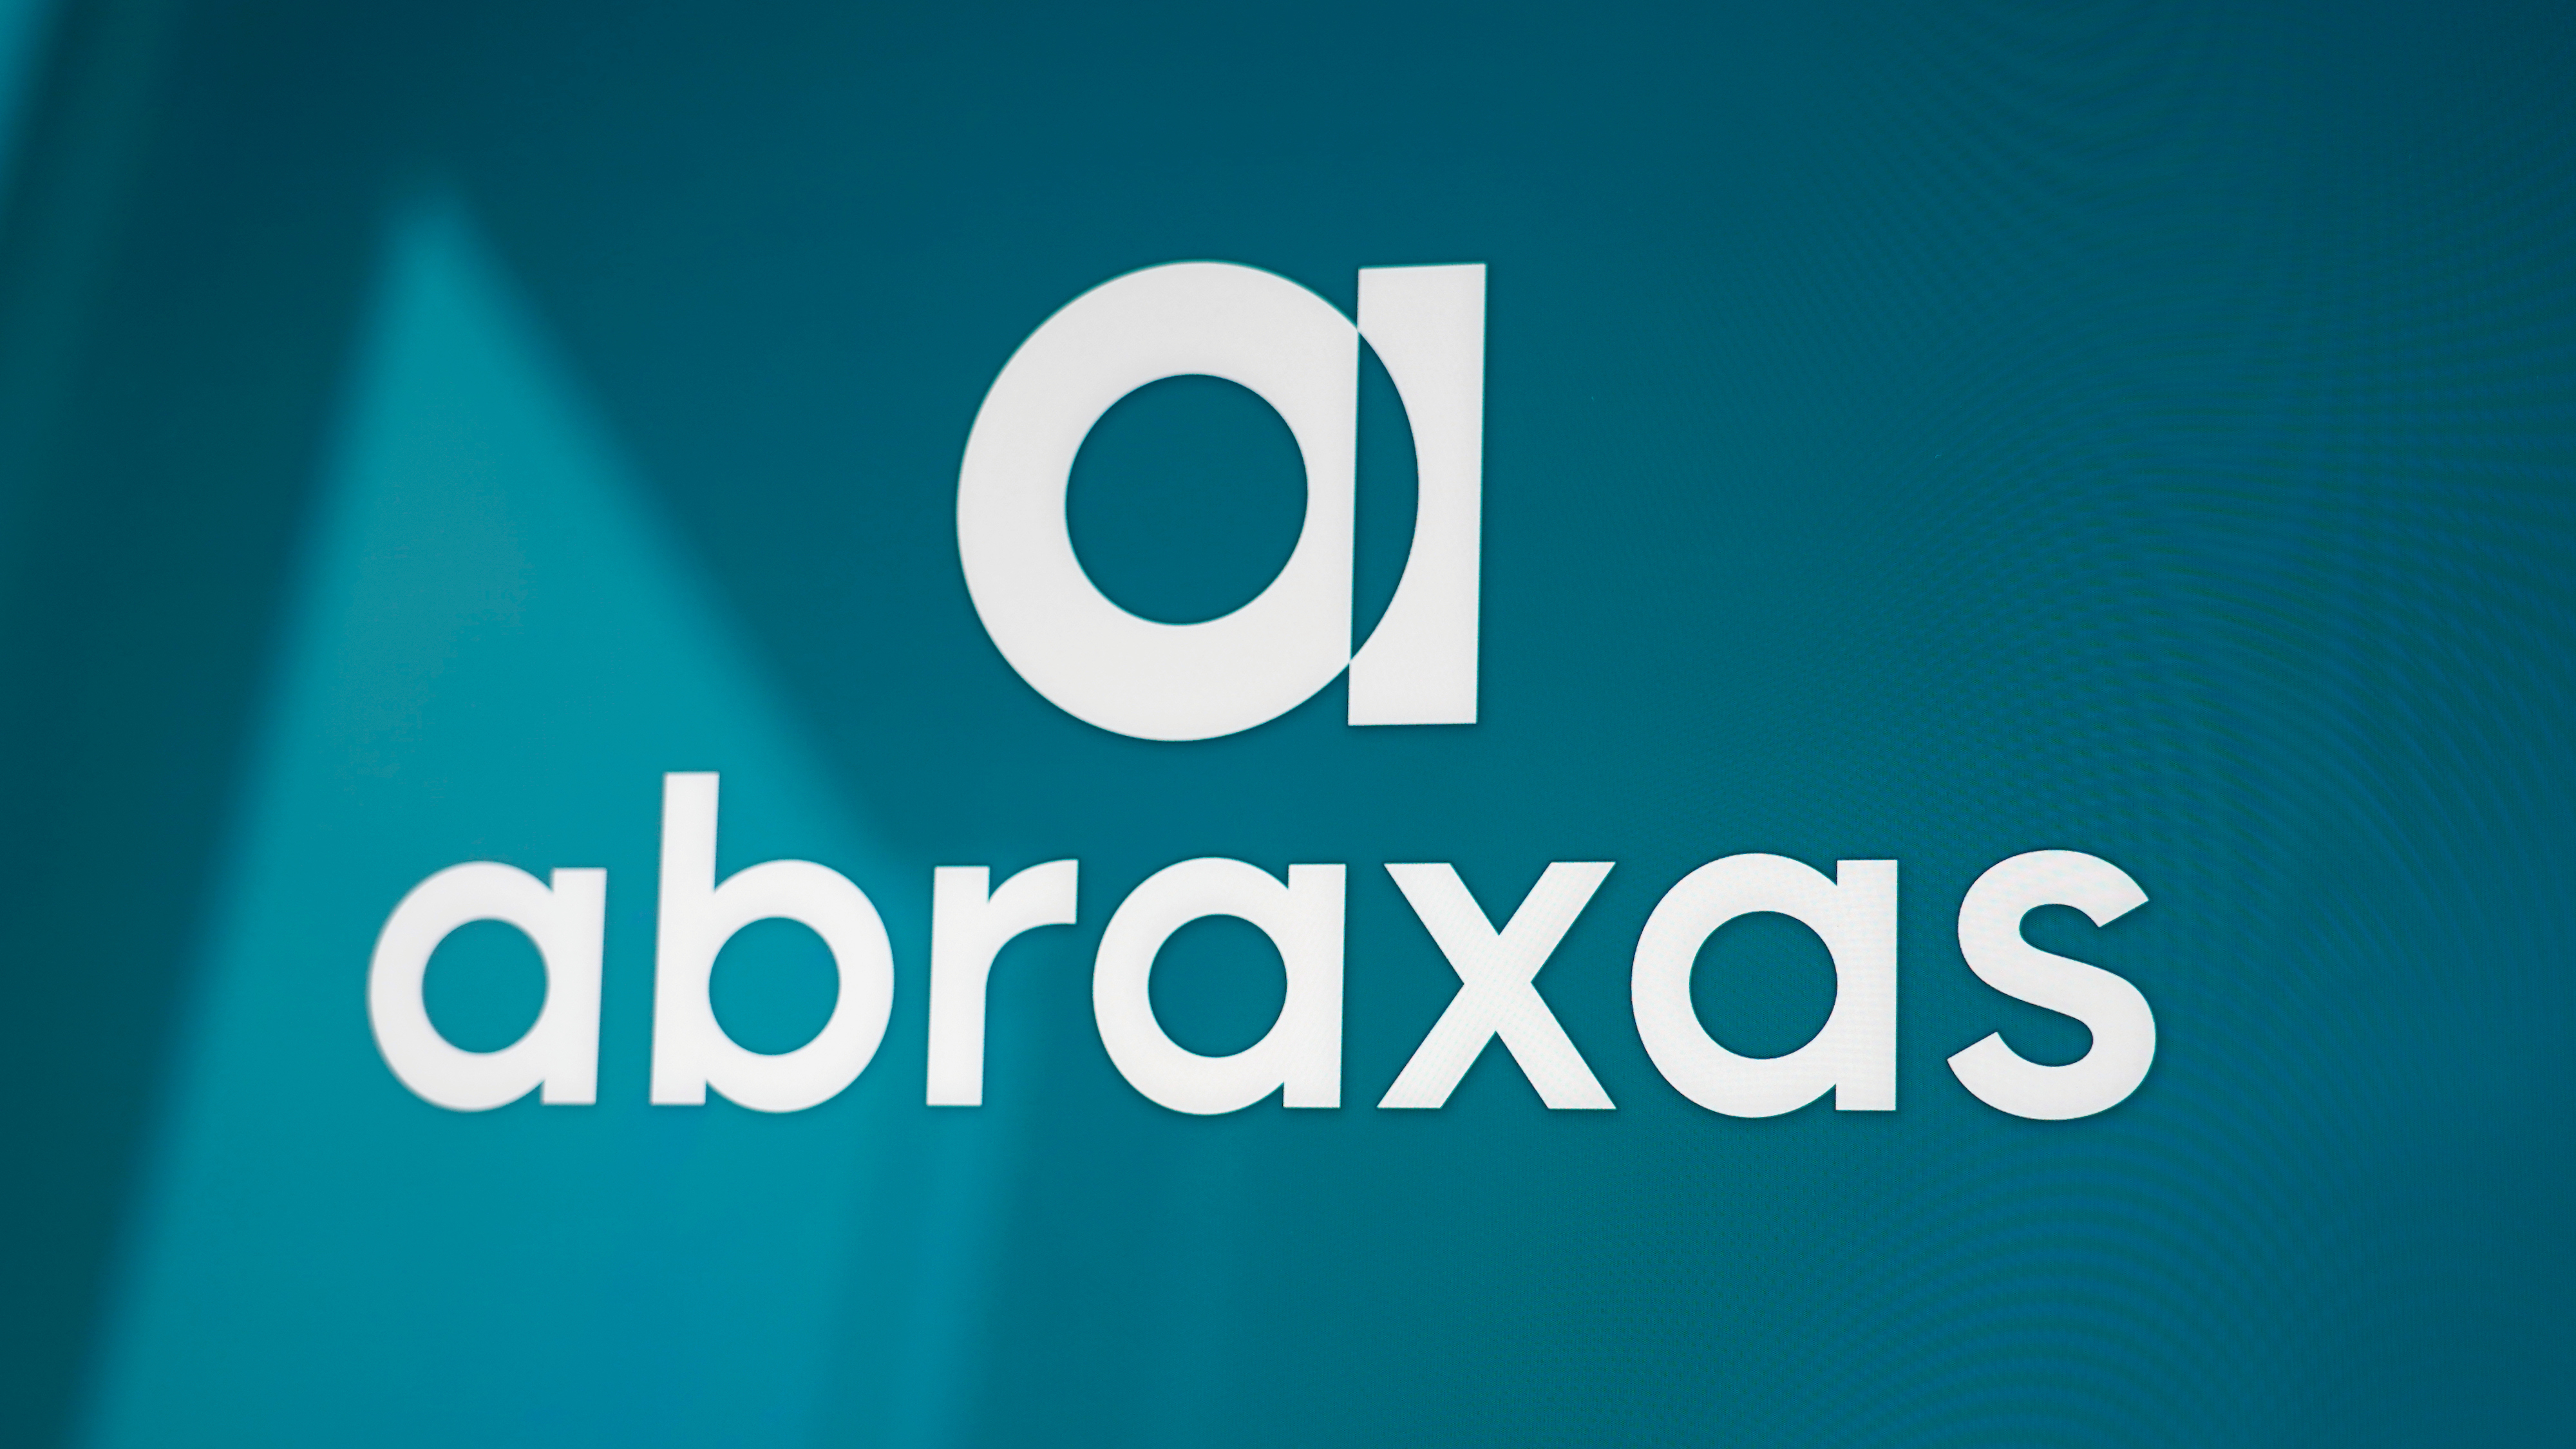 Abraxas Brand Design